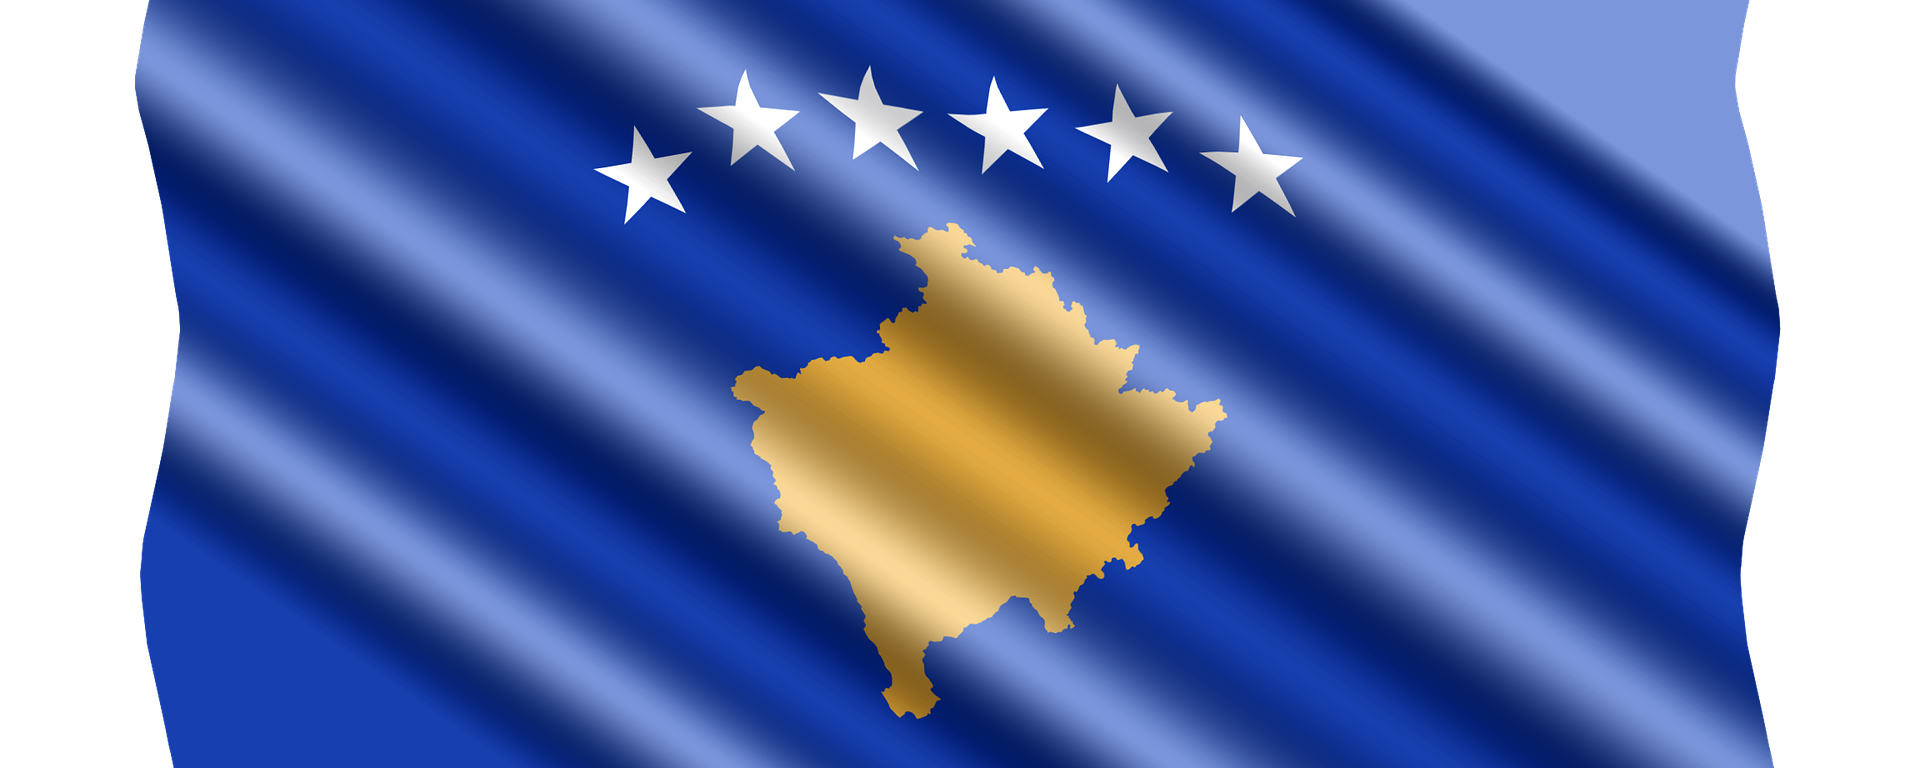 Застава Косова - Sputnik Србија, 1920, 13.04.2021